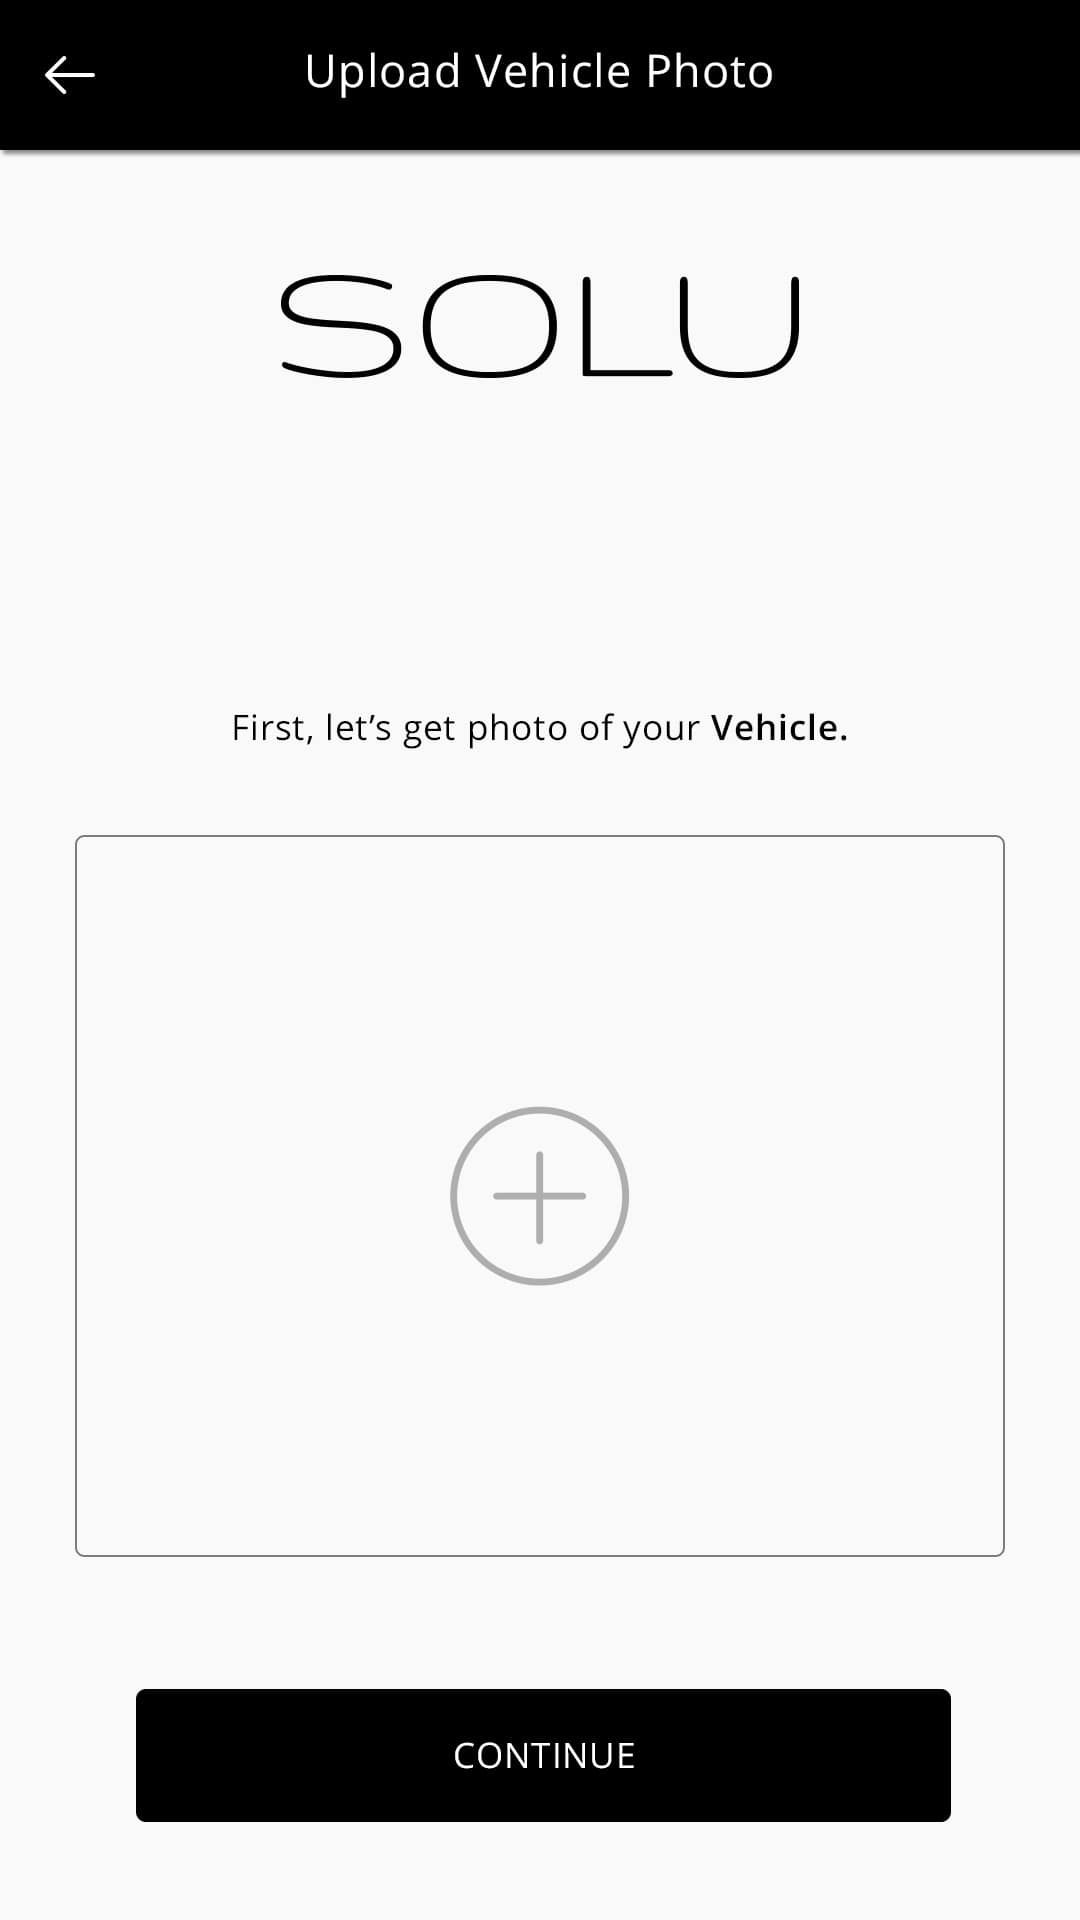 Solu (ride sharing app) Upload Vehicle Data screen